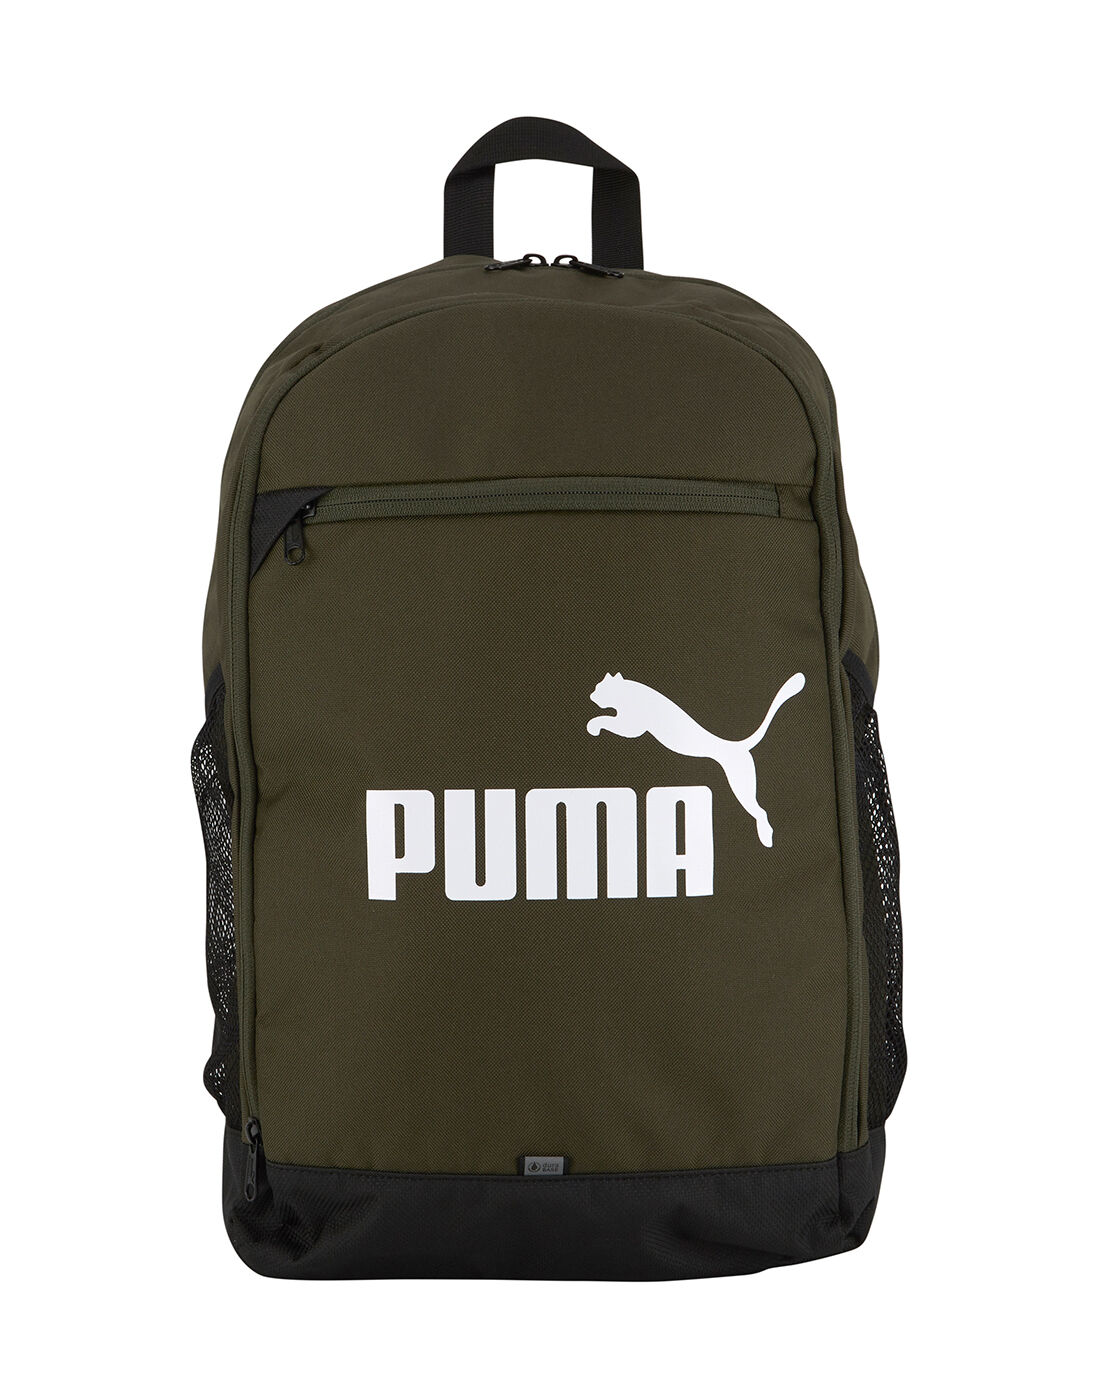 puma bags for school